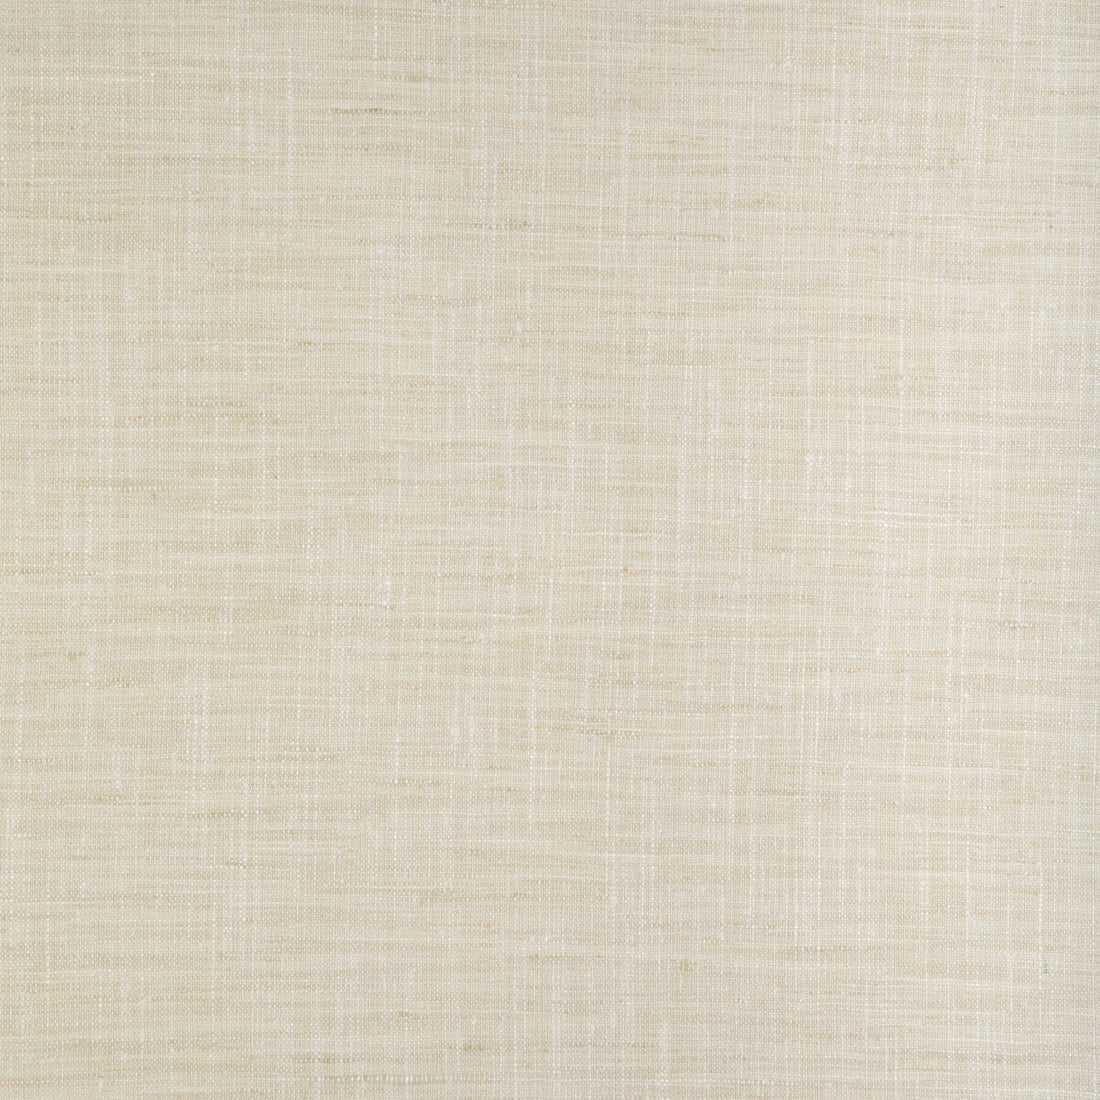 Kravet Smart fabric in 34983-15 color - pattern 34983.161.0 - by Kravet Smart